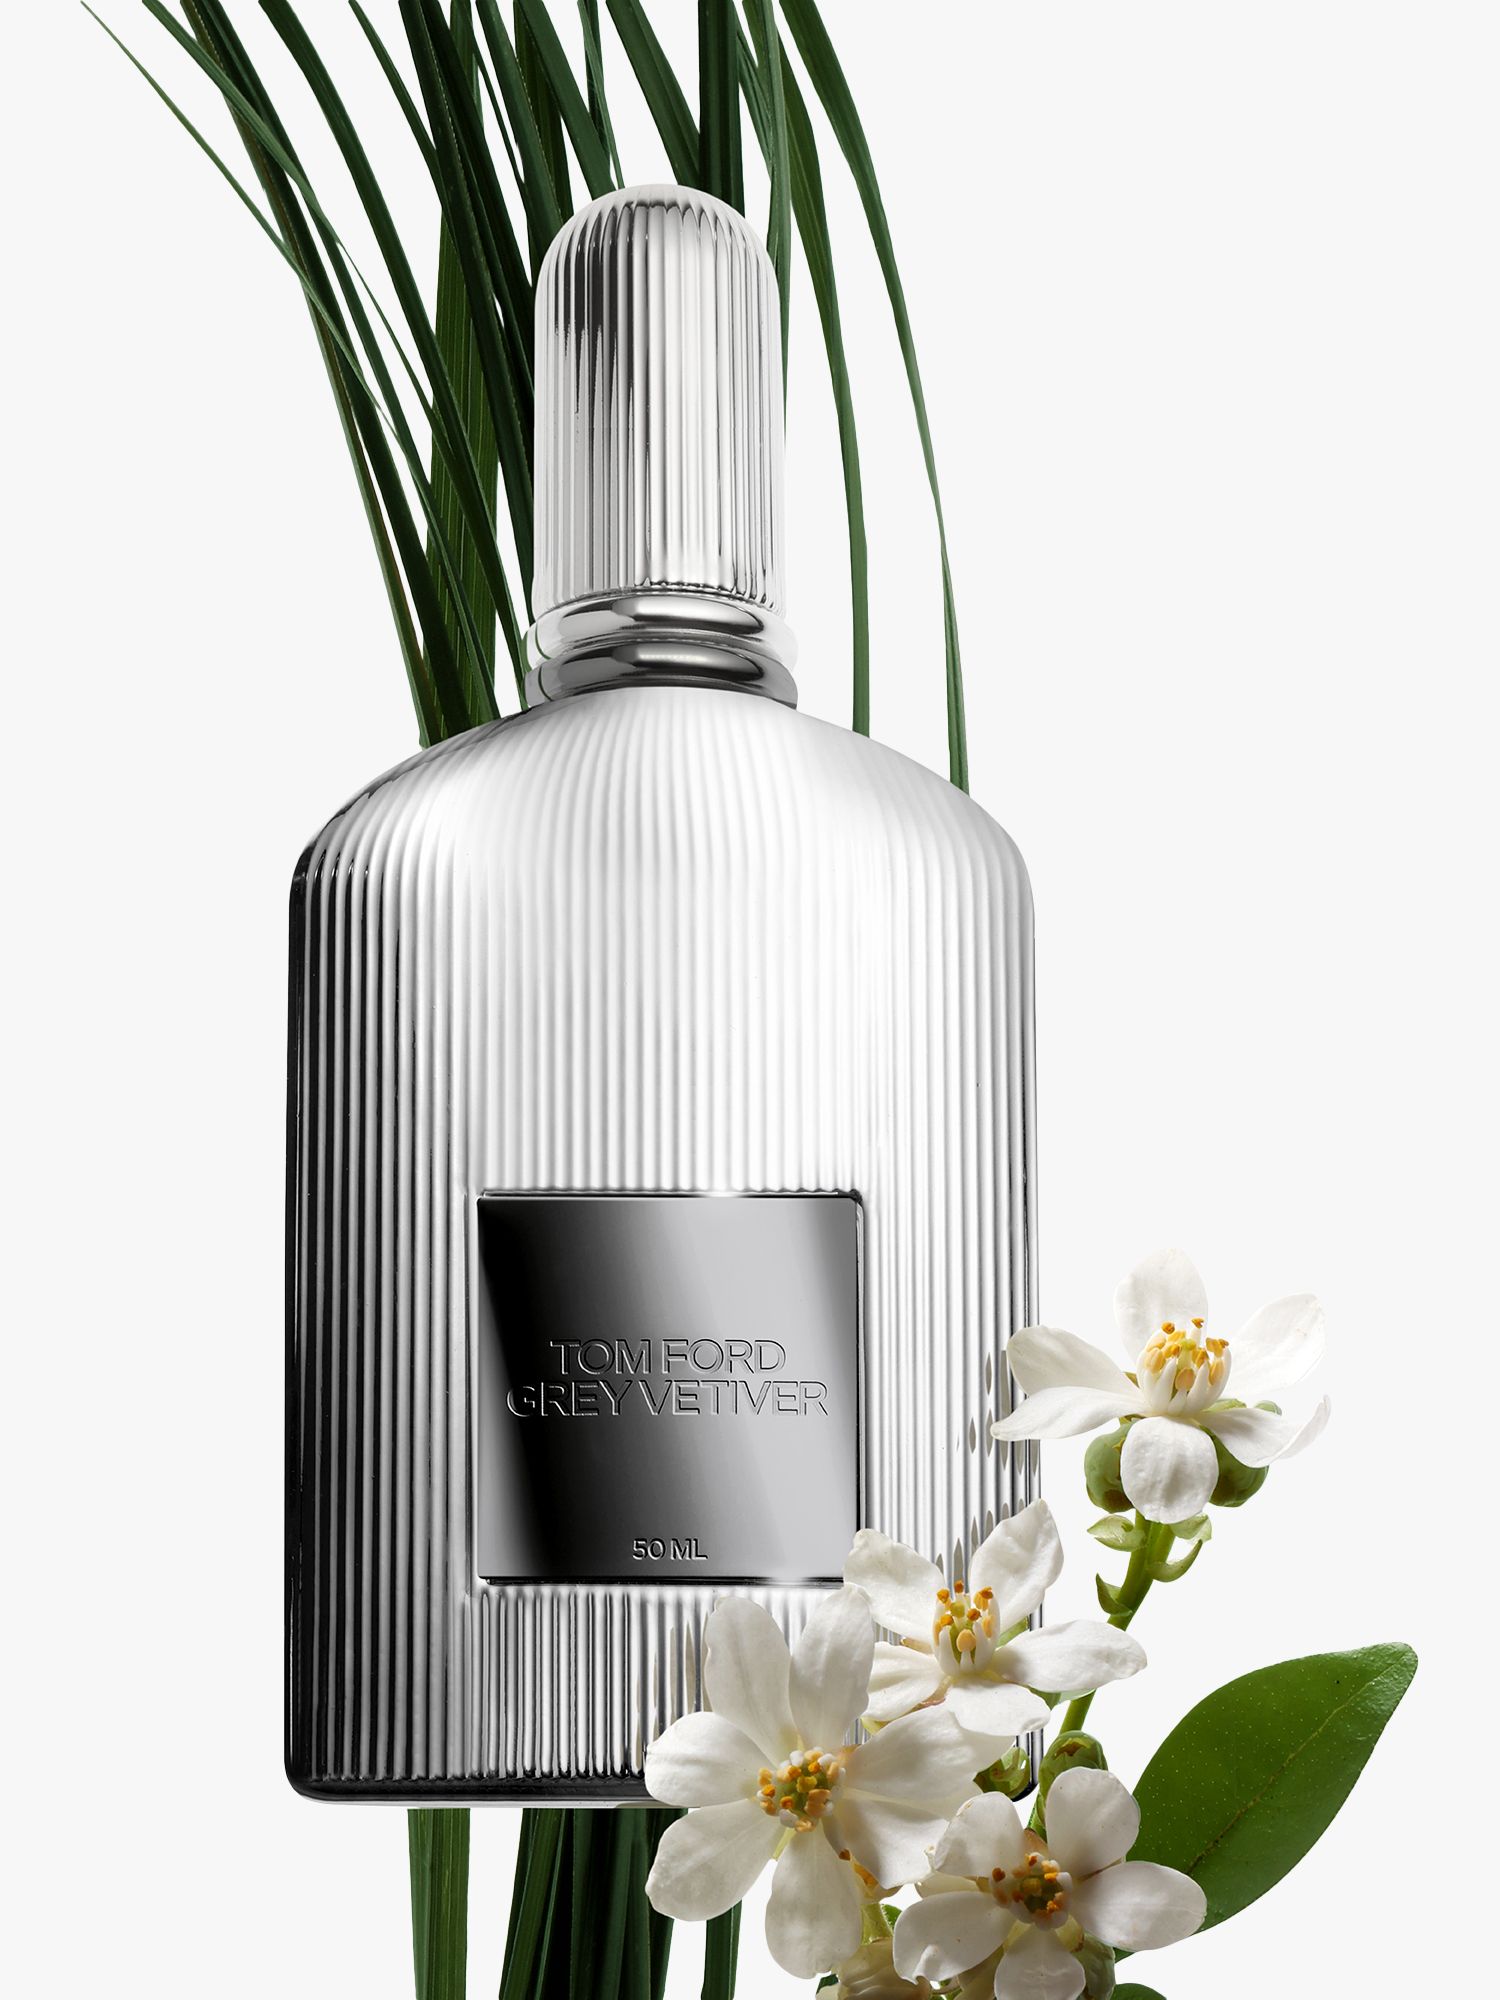 TOM FORD Grey Vetiver Parfum, 50ml 2